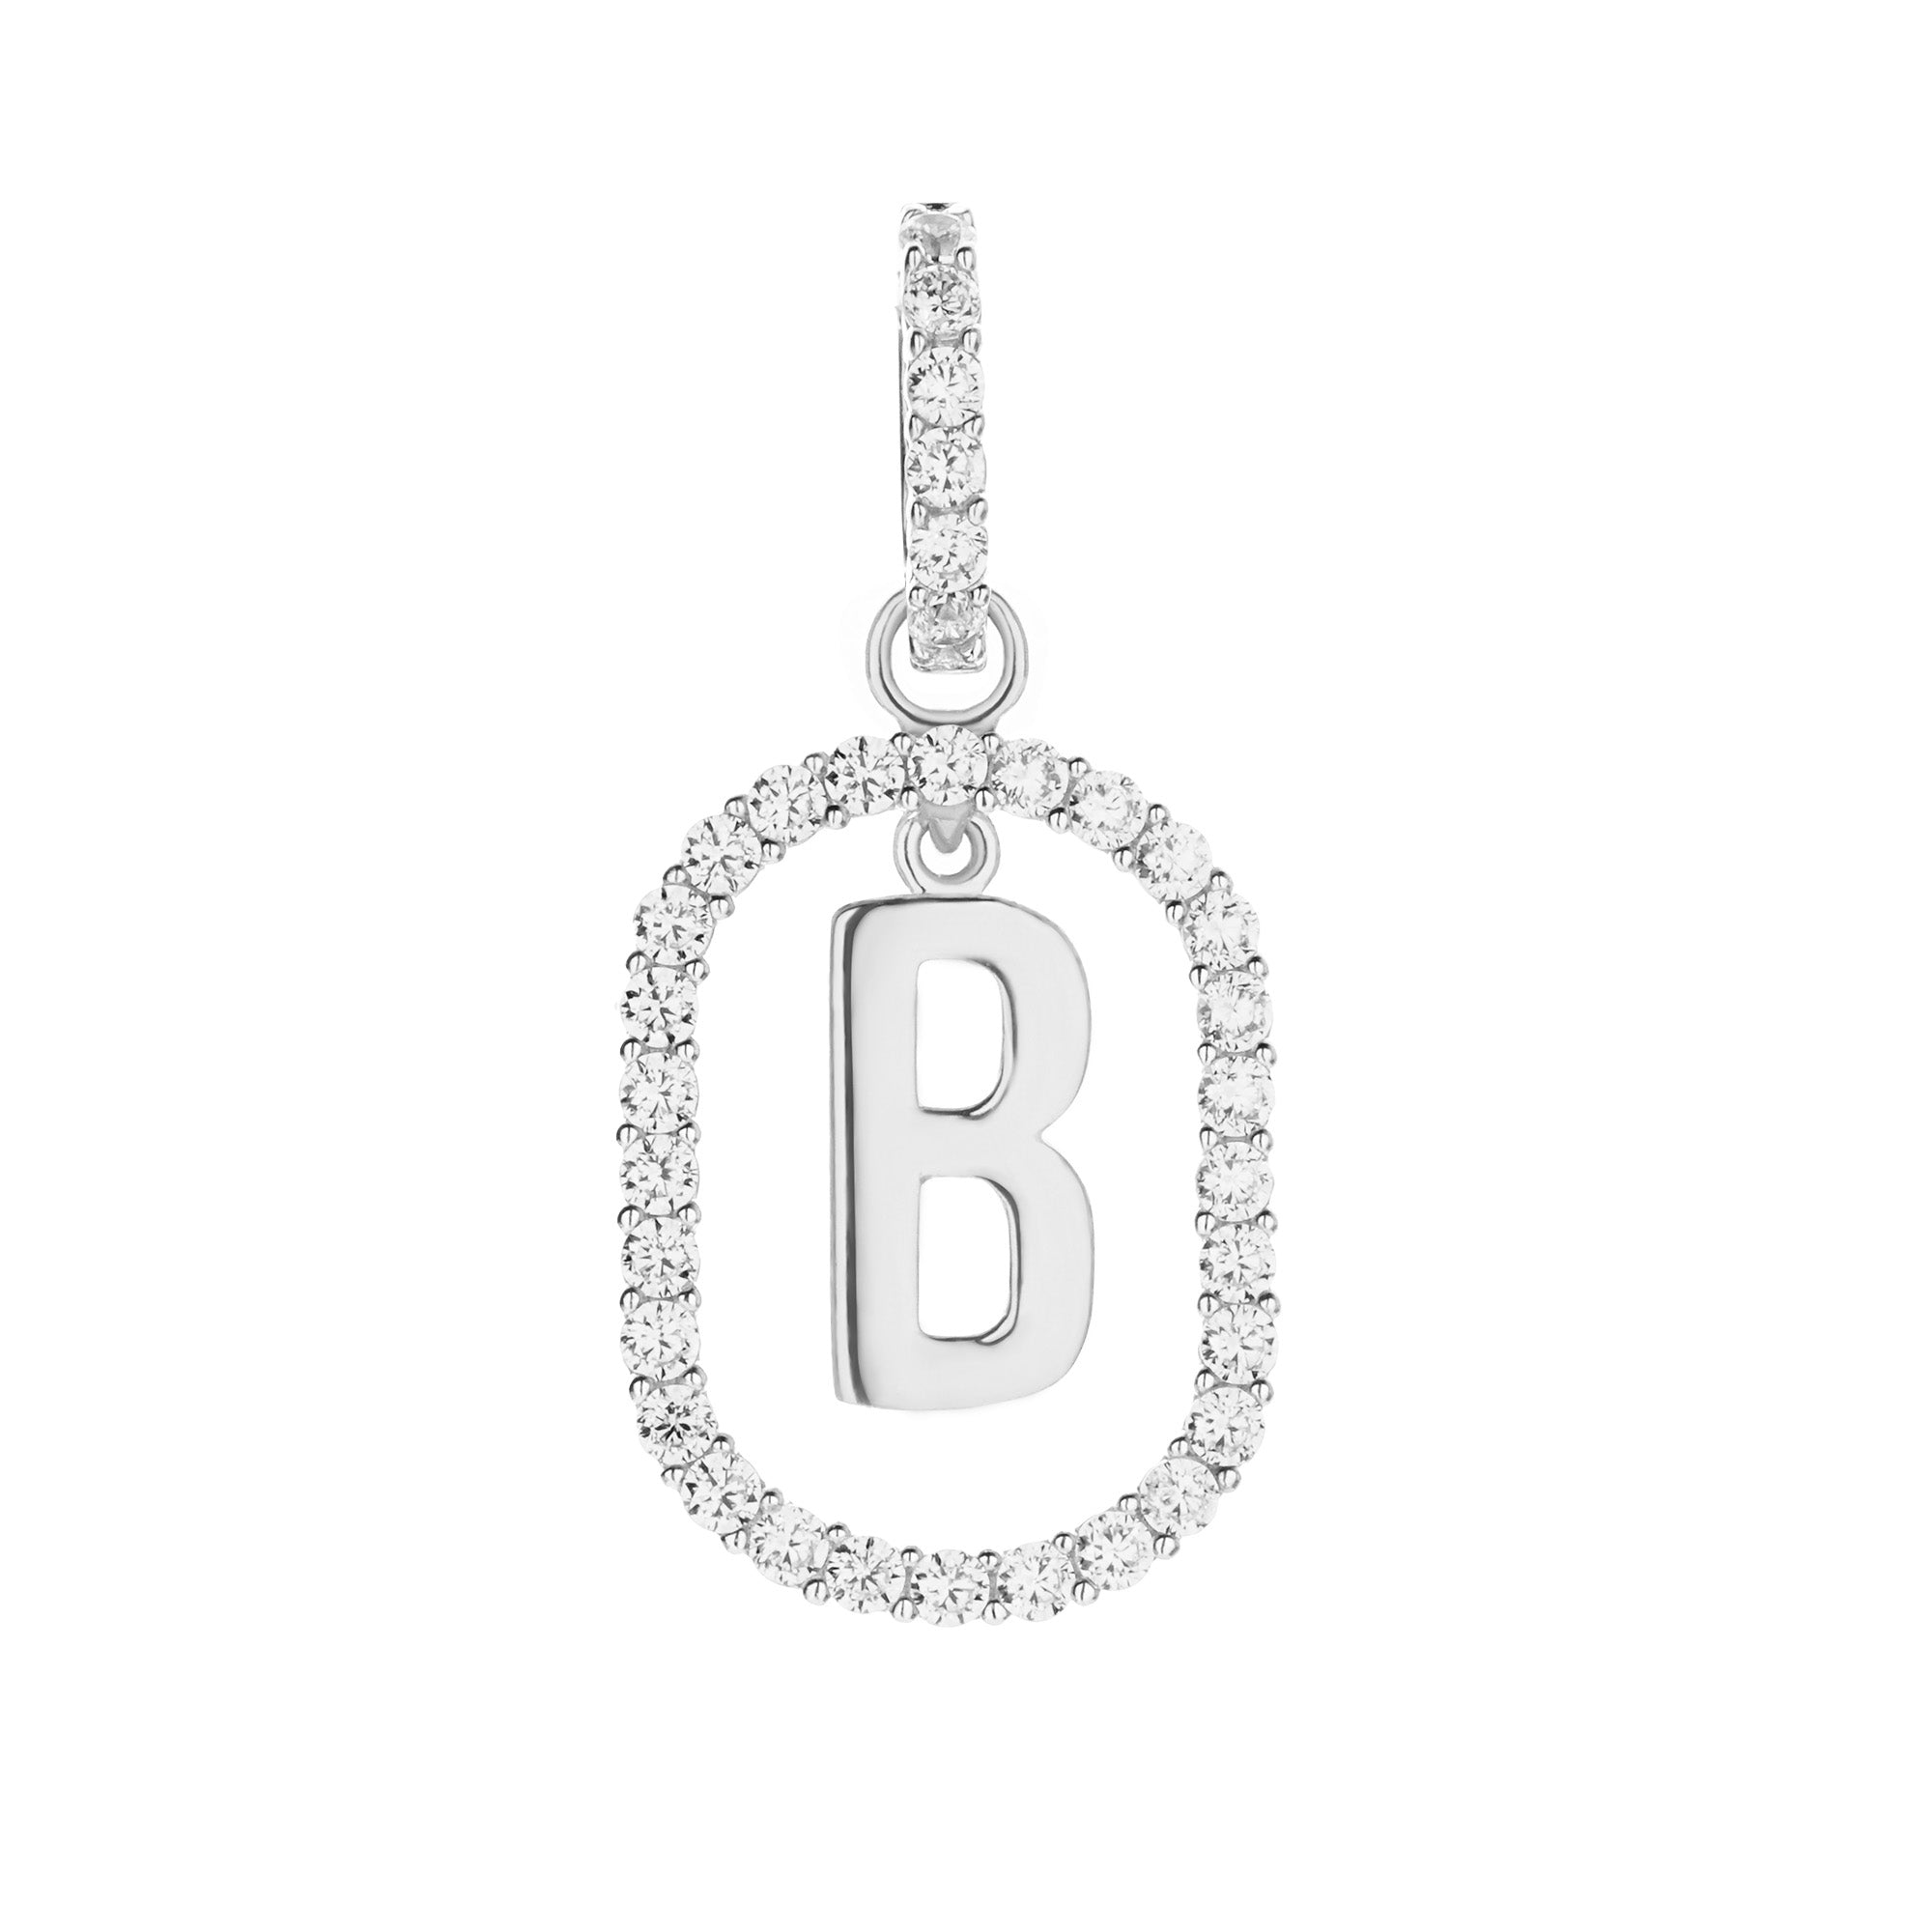 Aerin B Gold Pendant - Initial Pendant - Juene Jewelry